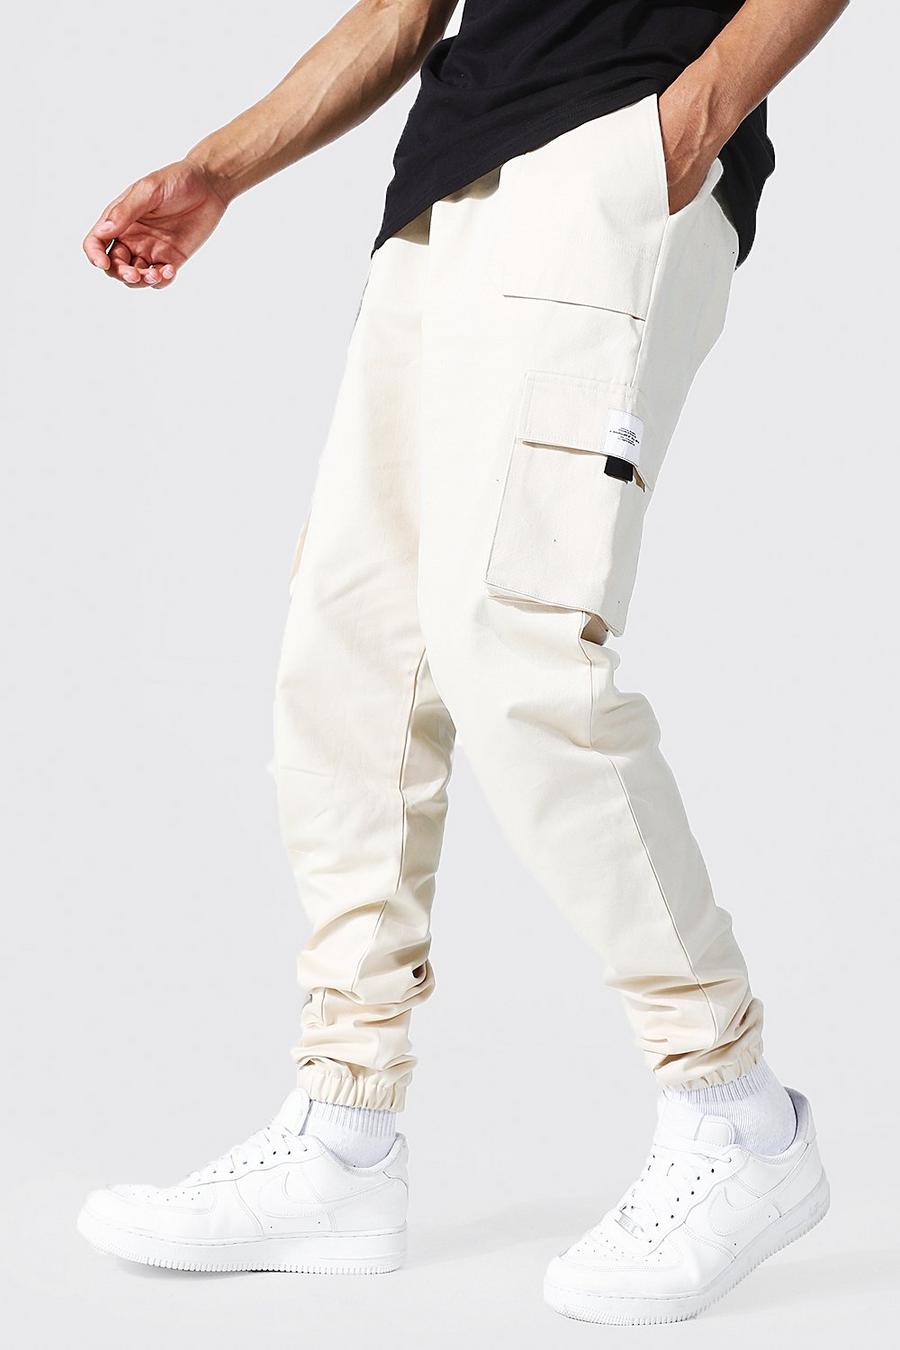 Pantalón deportivo Tall cargo de sarga con cinturón y etiqueta, Ecru blanco